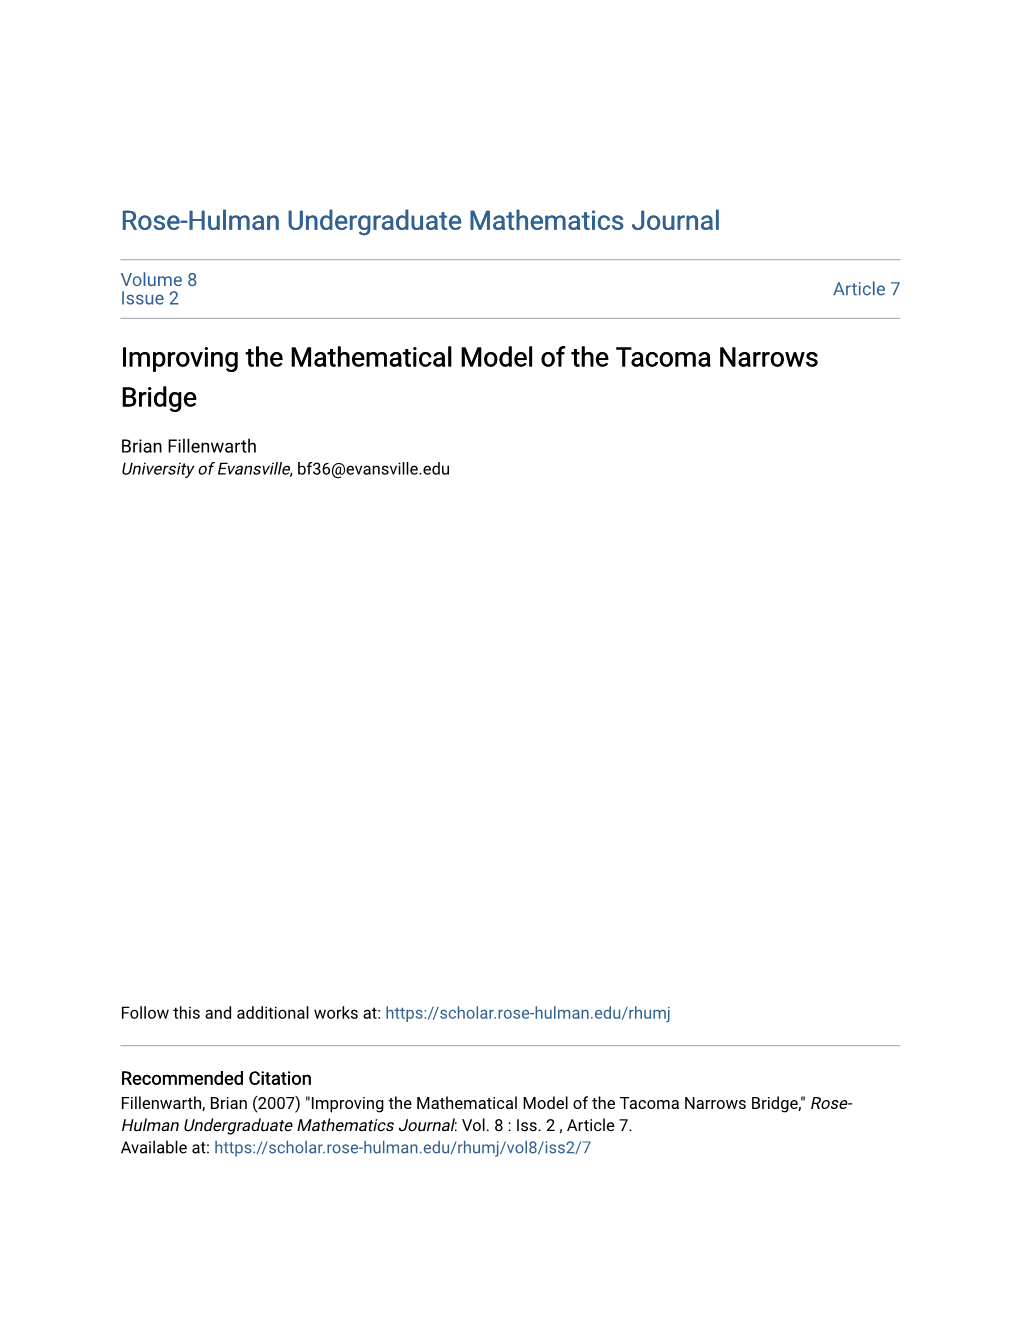 Improving the Mathematical Model of the Tacoma Narrows Bridge